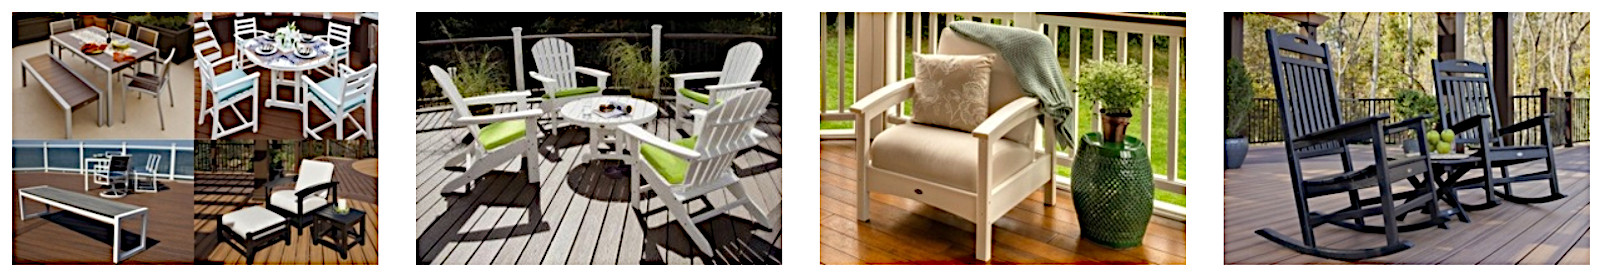 Trex outdoor furniture discount